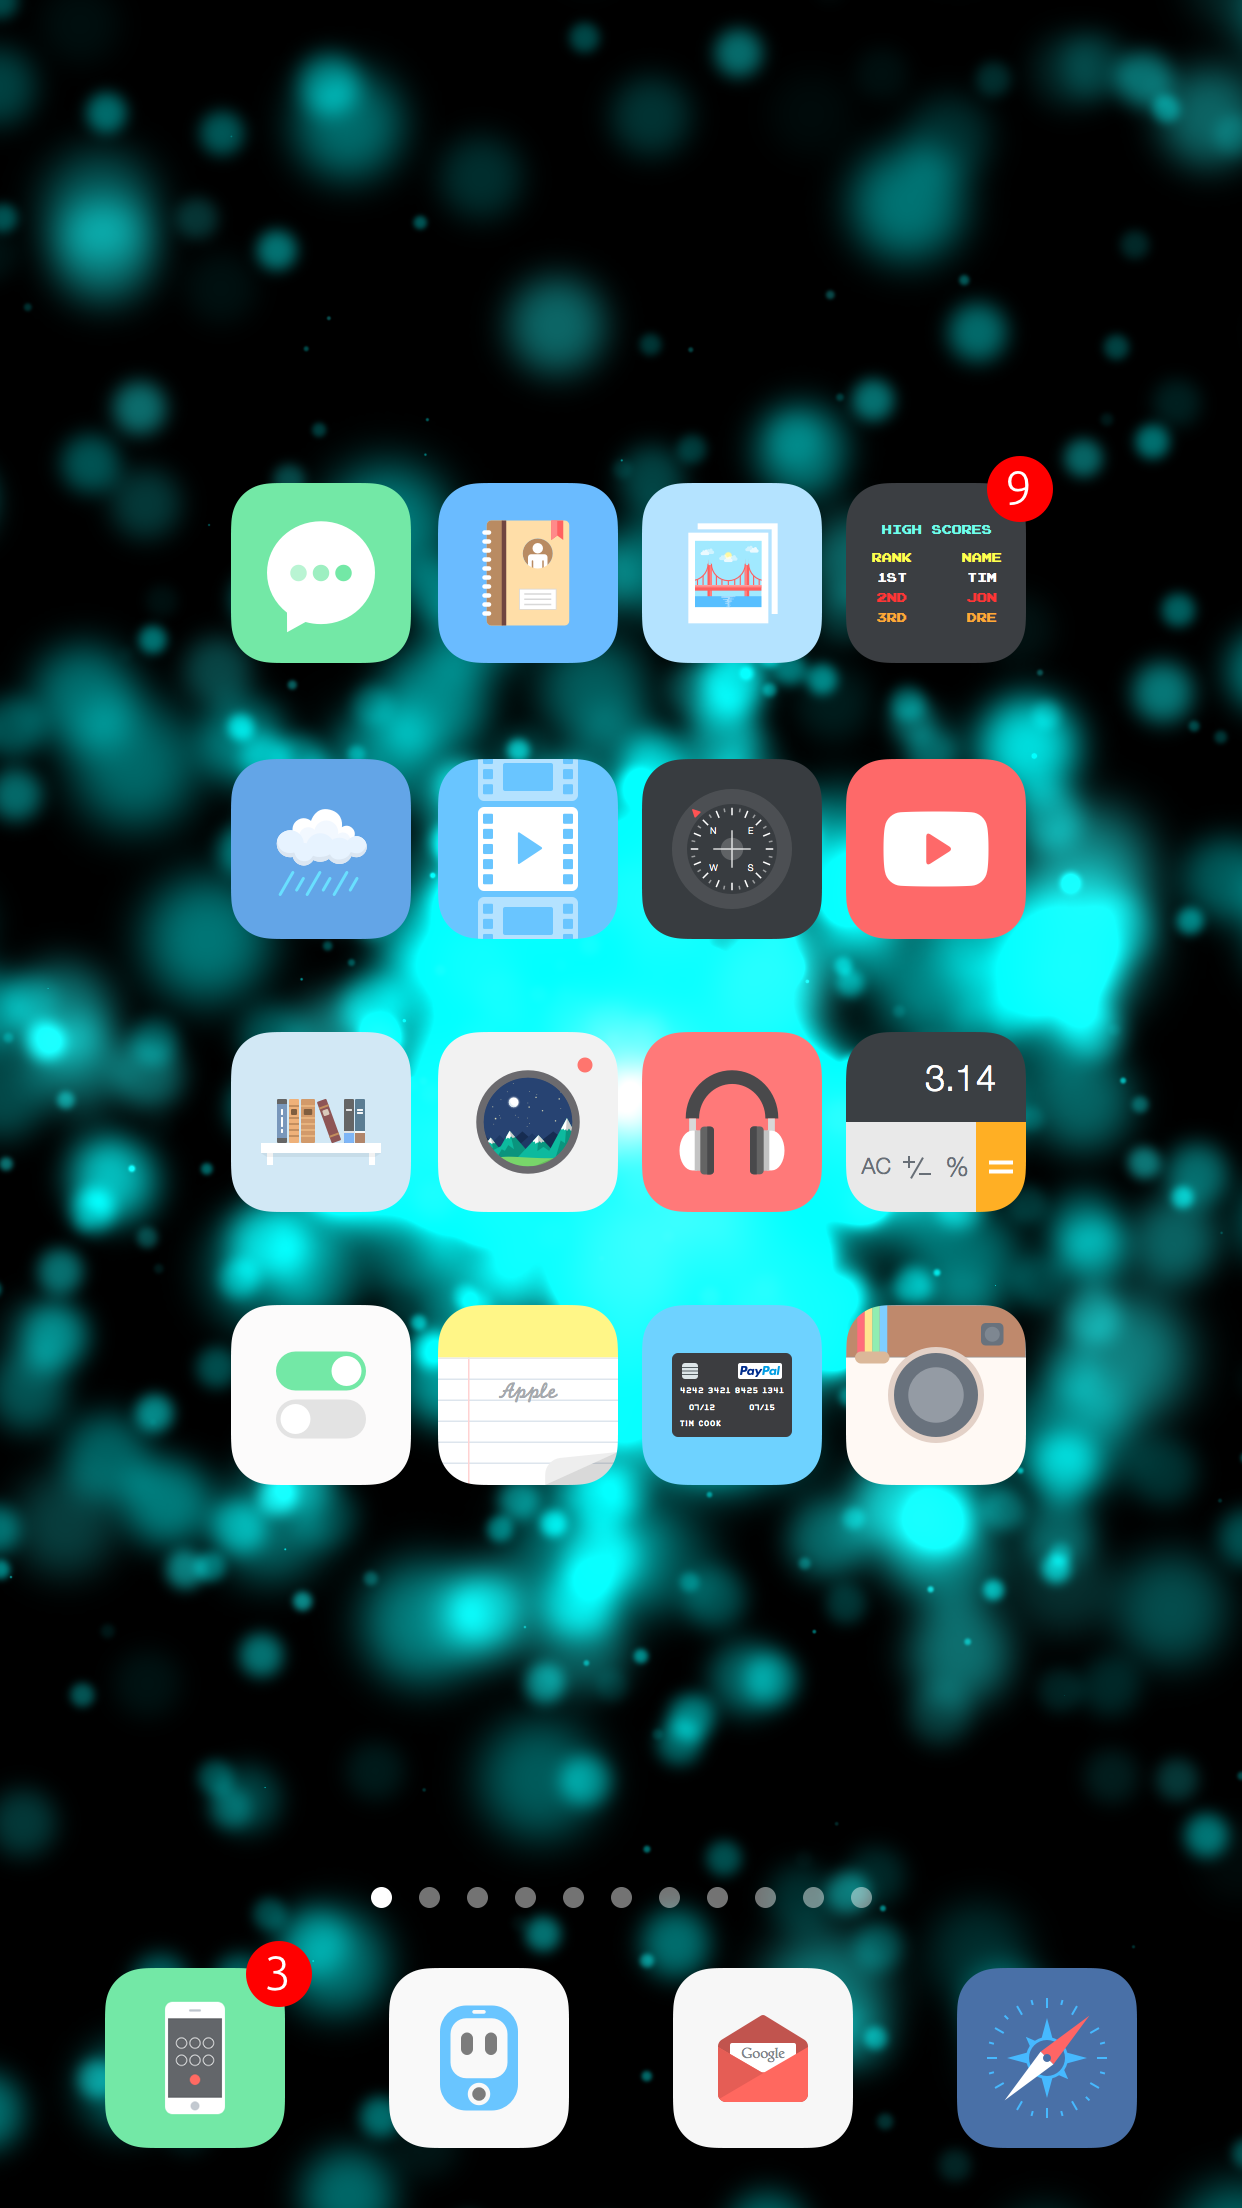 iphone dynamic wallpaper reddit